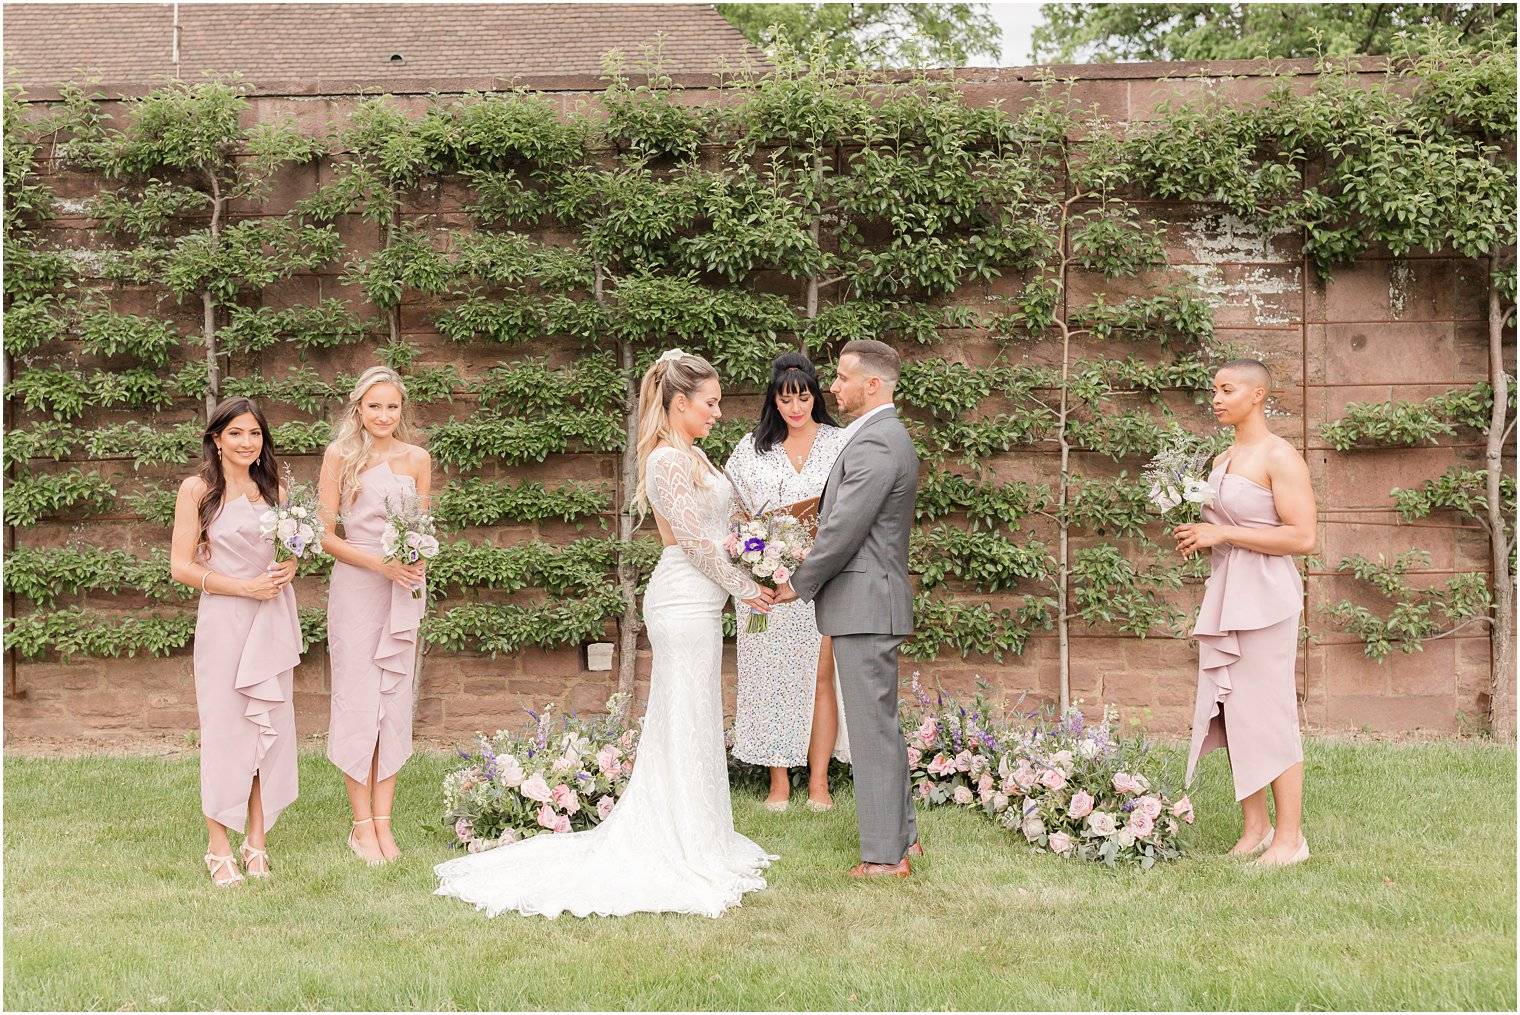 Croatia Inspired Tyler Gardens Wedding Minimony┃Design by Dee Kay Events┃Photo by Idalia Photography